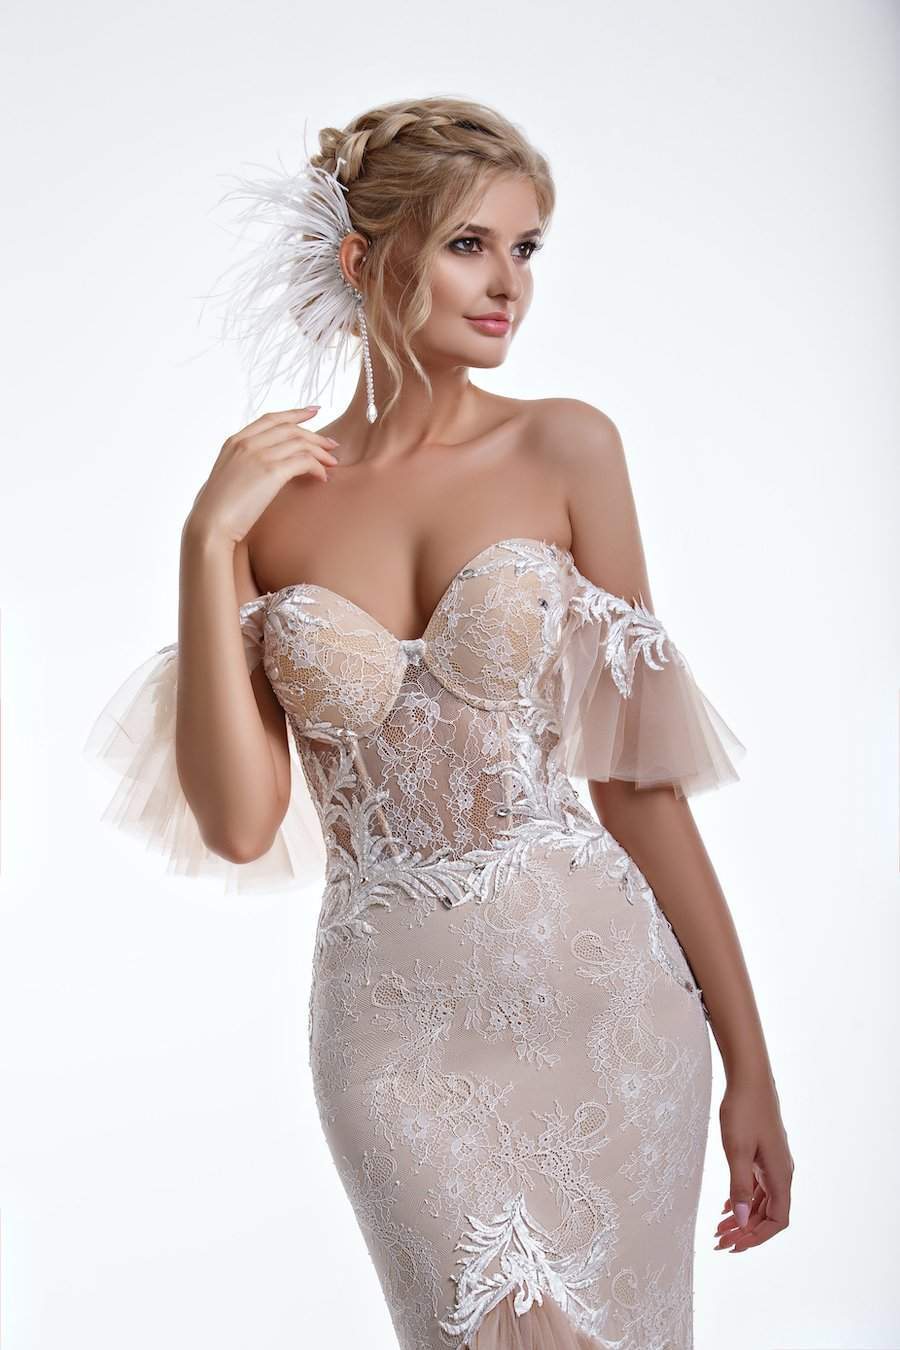 Beige Mermaid Wedding Dress-Classic Elegant Gowns,Mermaid,Royal Wedding Dresses,White